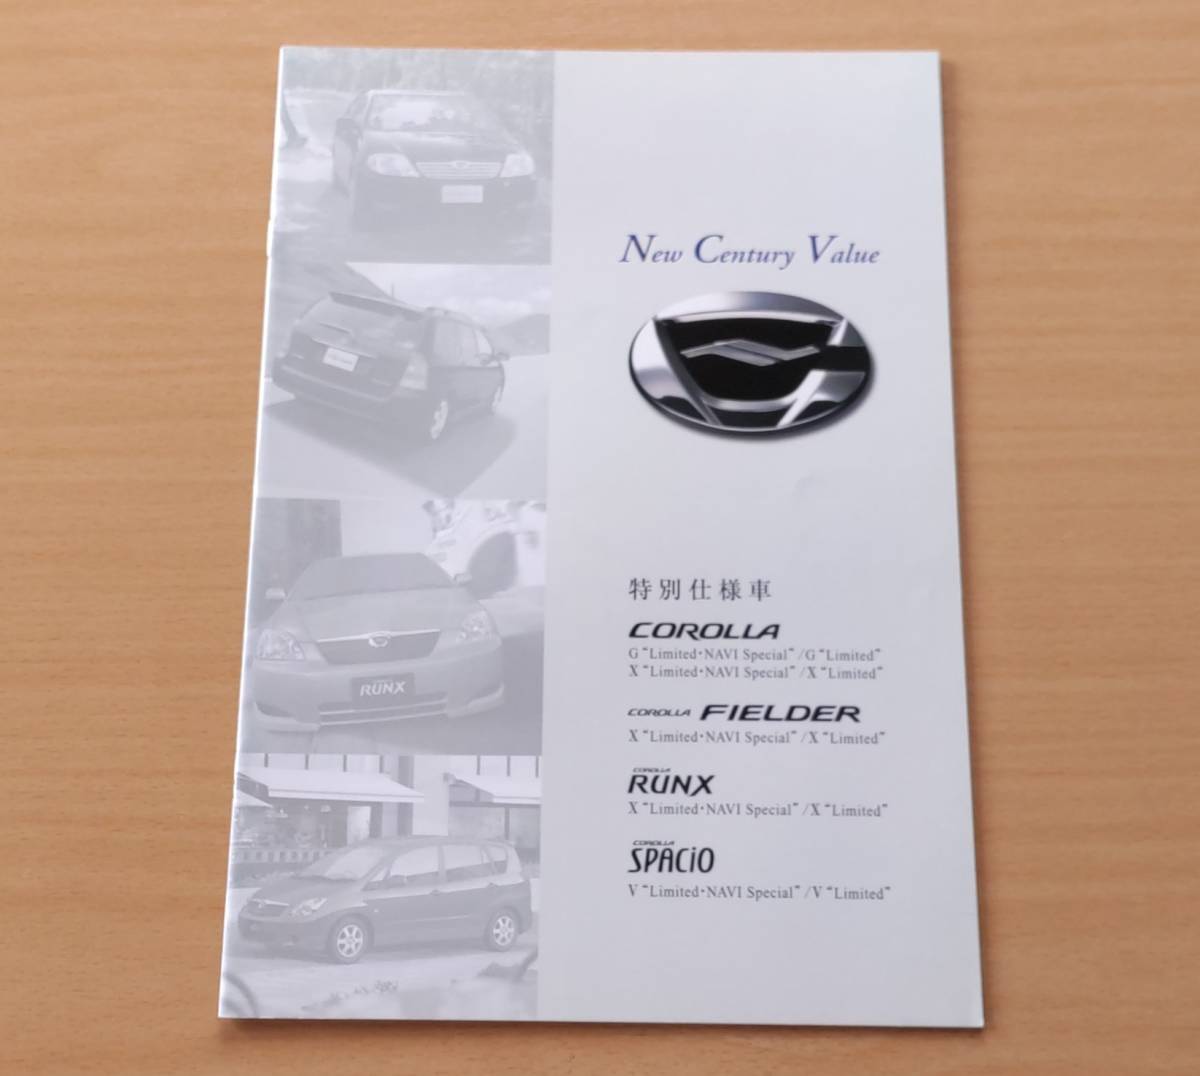 * Toyota * Corolla / Corolla Fielder / Corolla Runx / Corolla Spacio специальный выпуск Limited 2002 год 9 месяц каталог * блиц-цена *